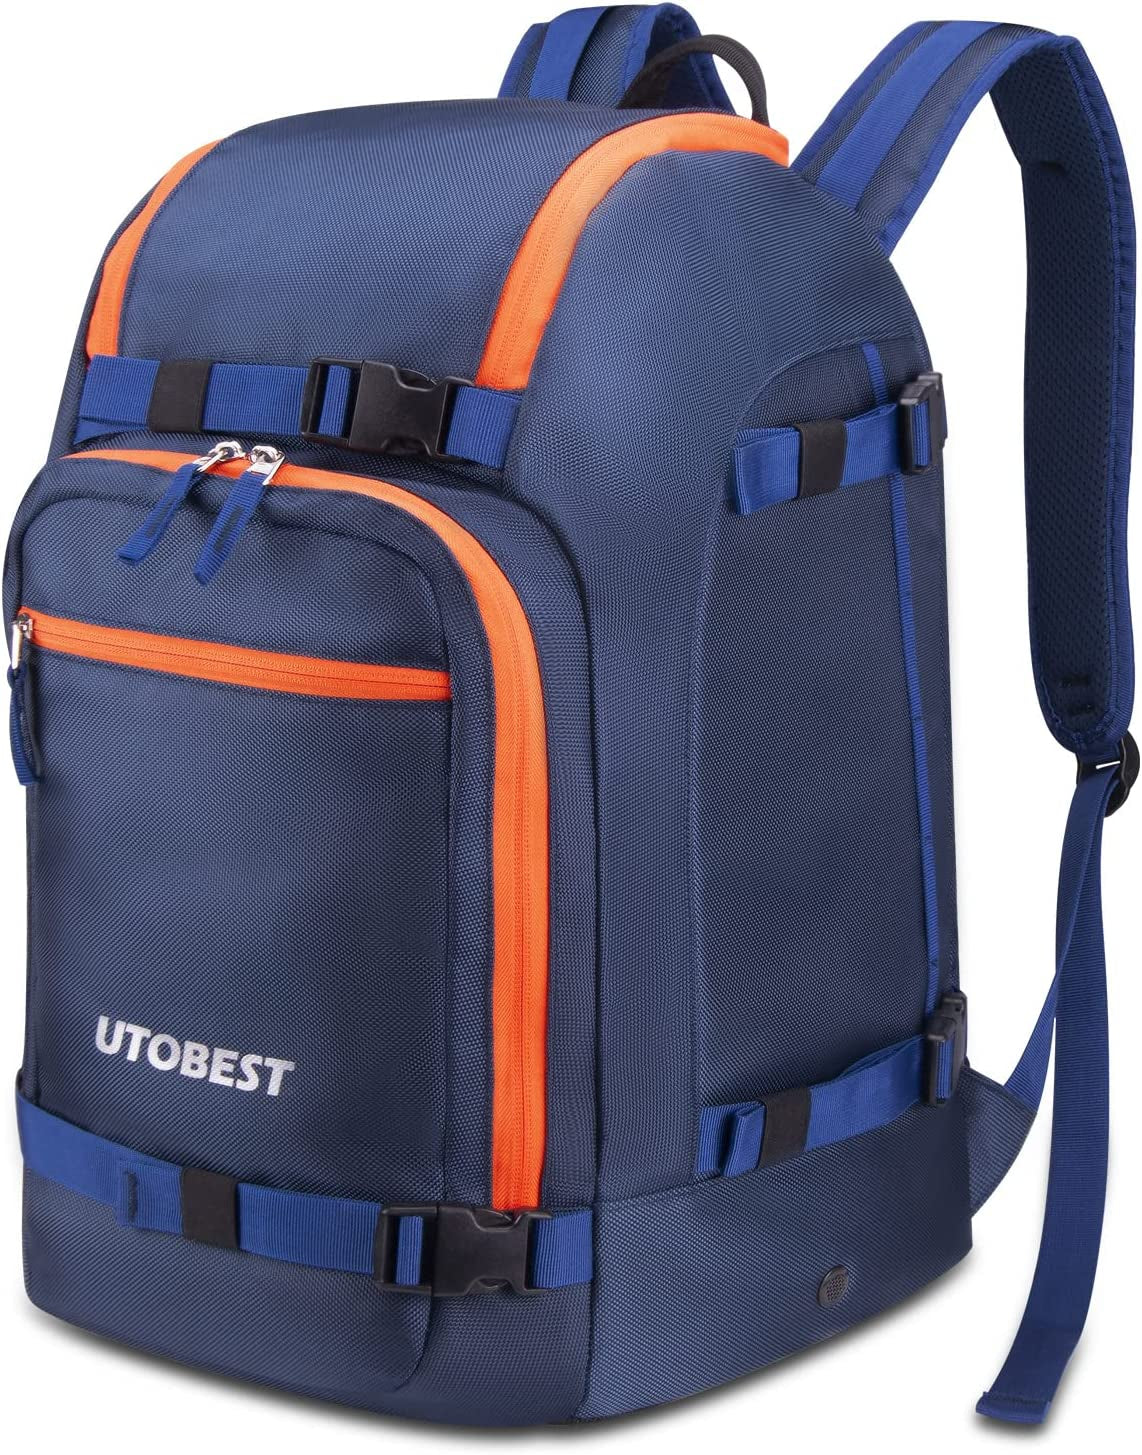 UTOBEST Ski Boot Bag Backpack, 55L Waterproof Snowboard Boot Bag, Ski Boot Travel Backpack for Skis, Snowboard, Helmet, Gloves, Goggles, Ski Gear, Accessories